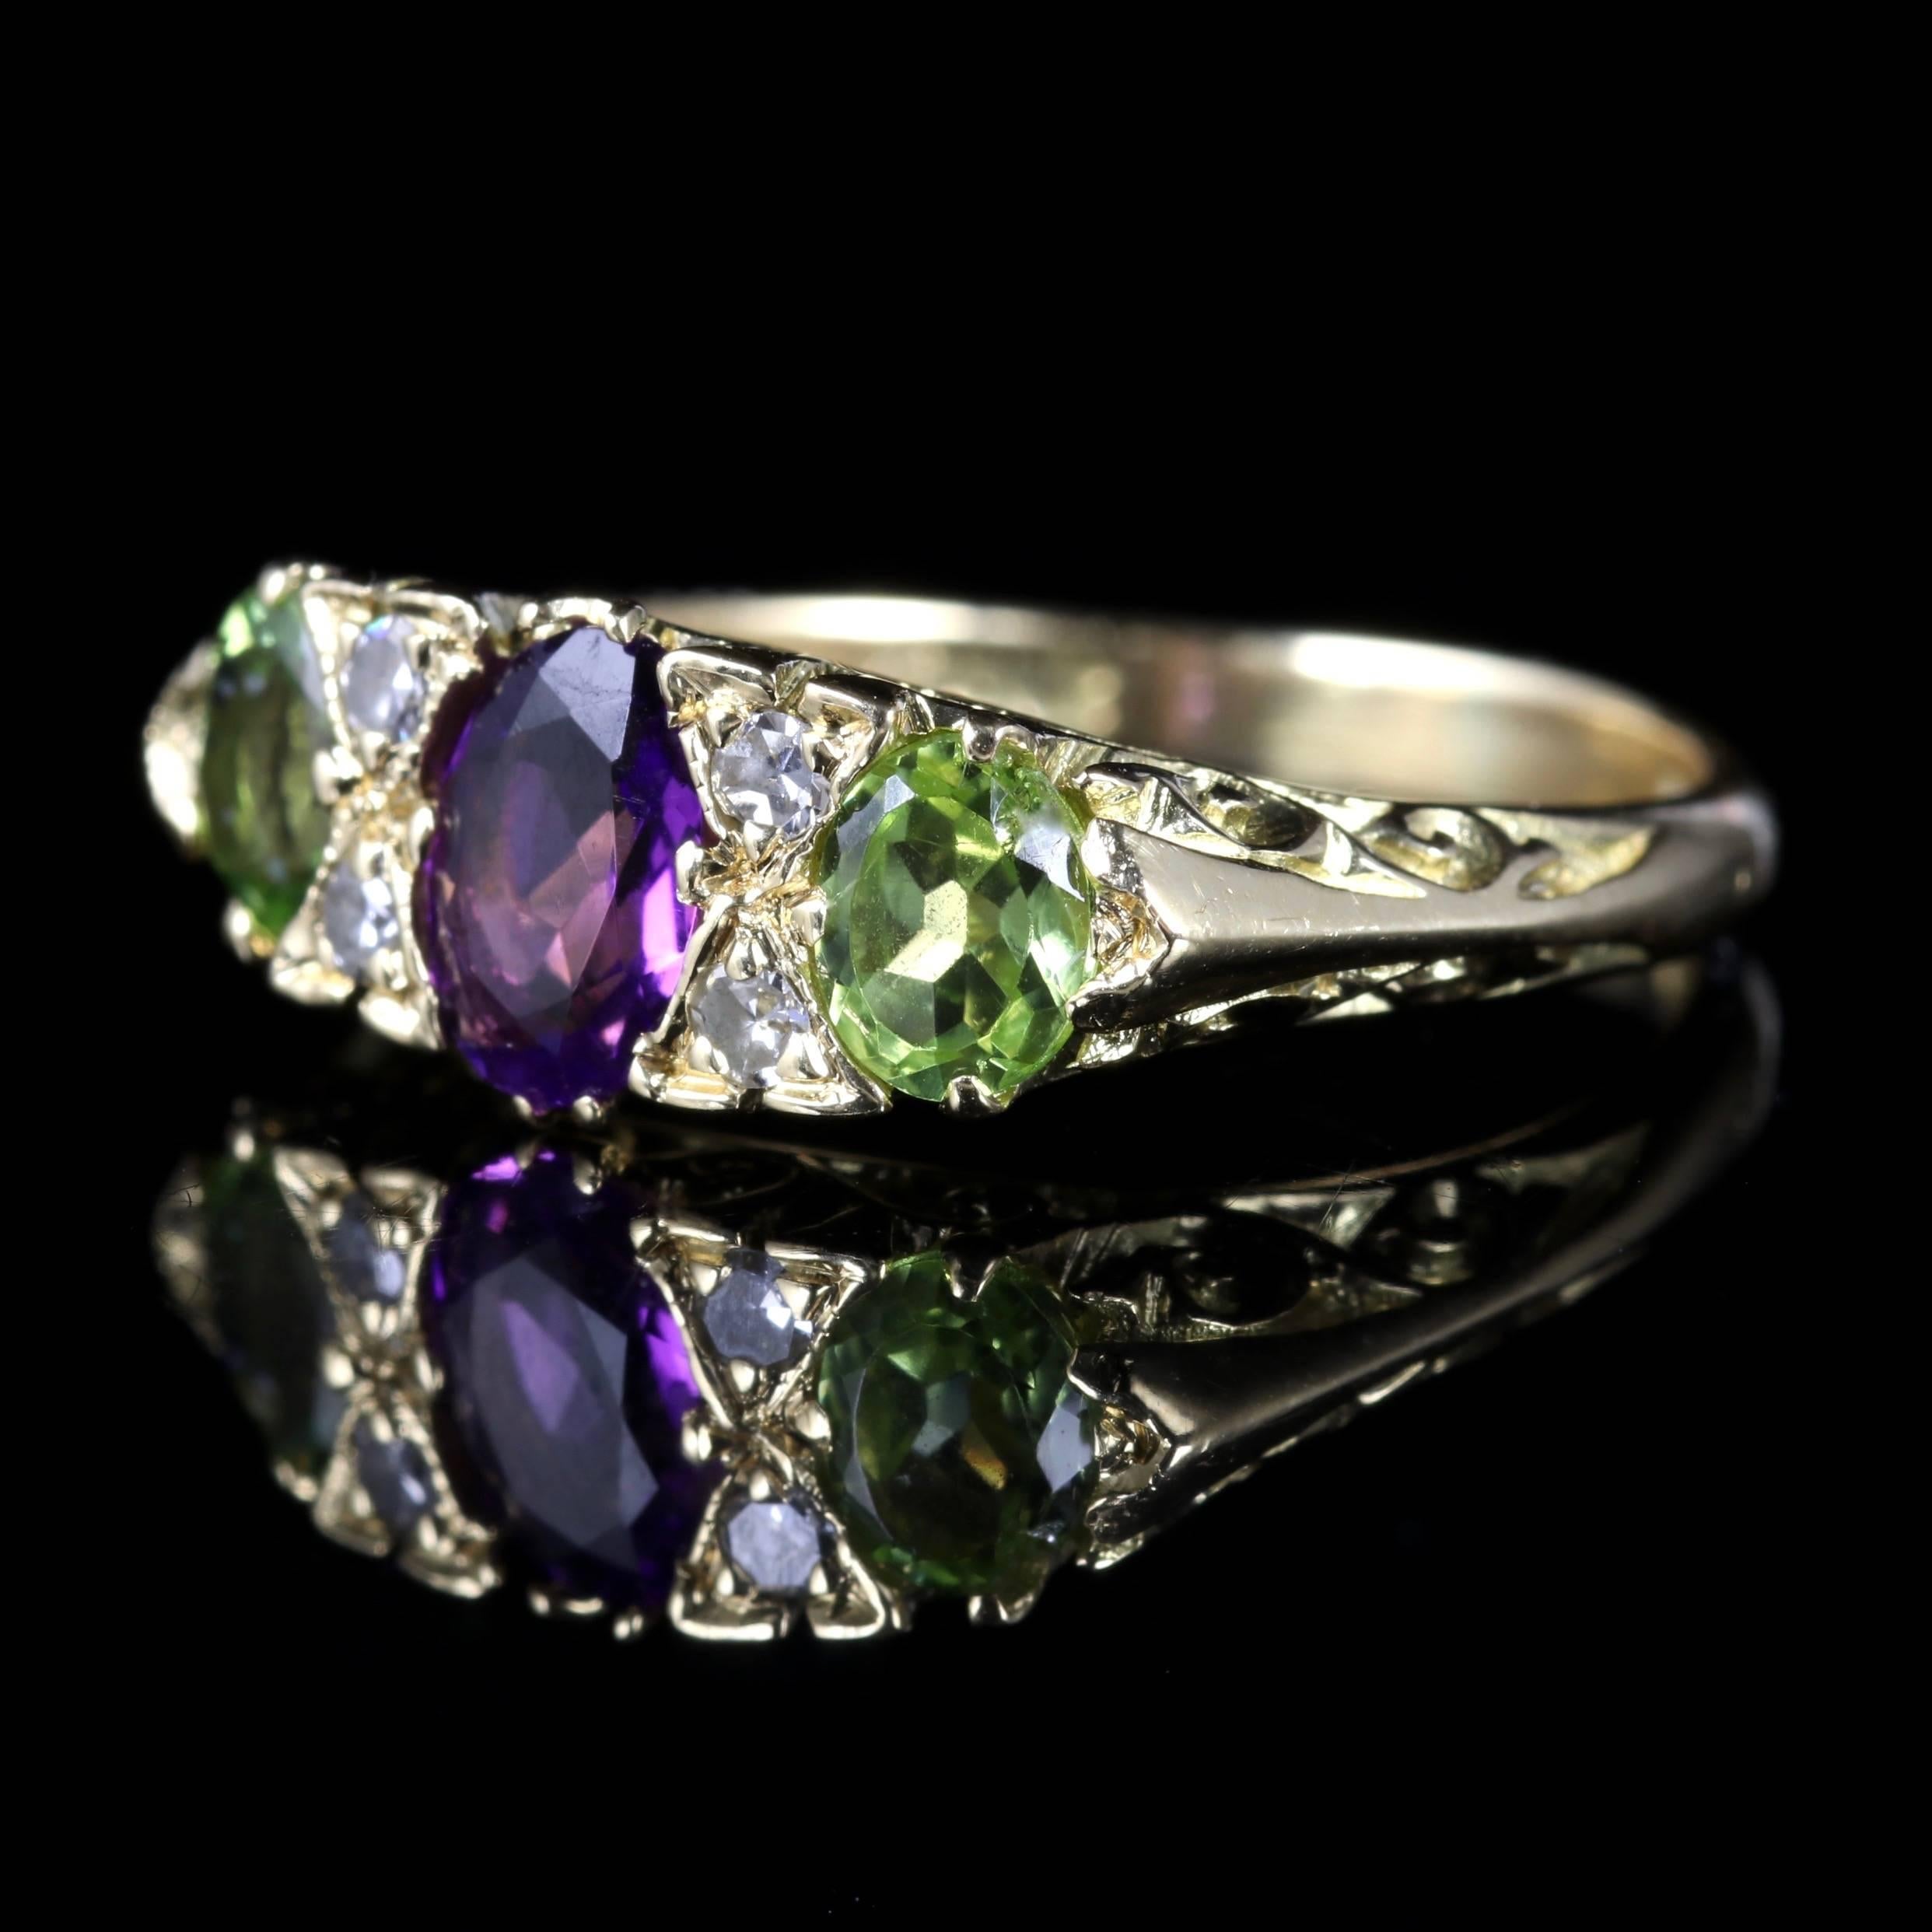 Women's Antique Victorian Suffragette Ring 18 Carat Gold Ring, circa 1900